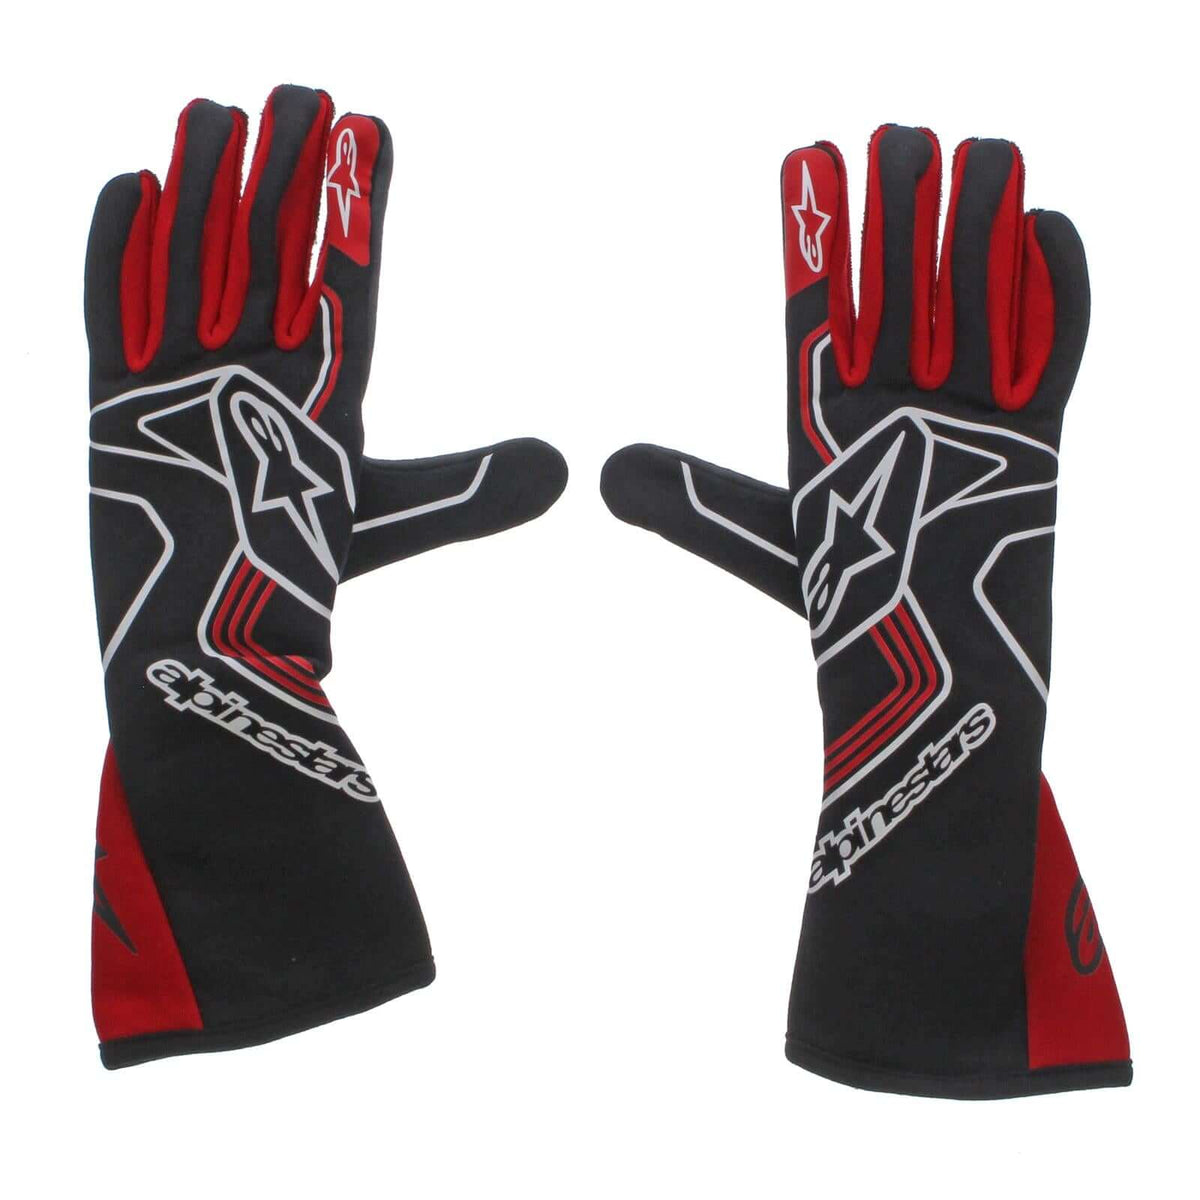 Tech-1 Race V3 Gloves - $159.95